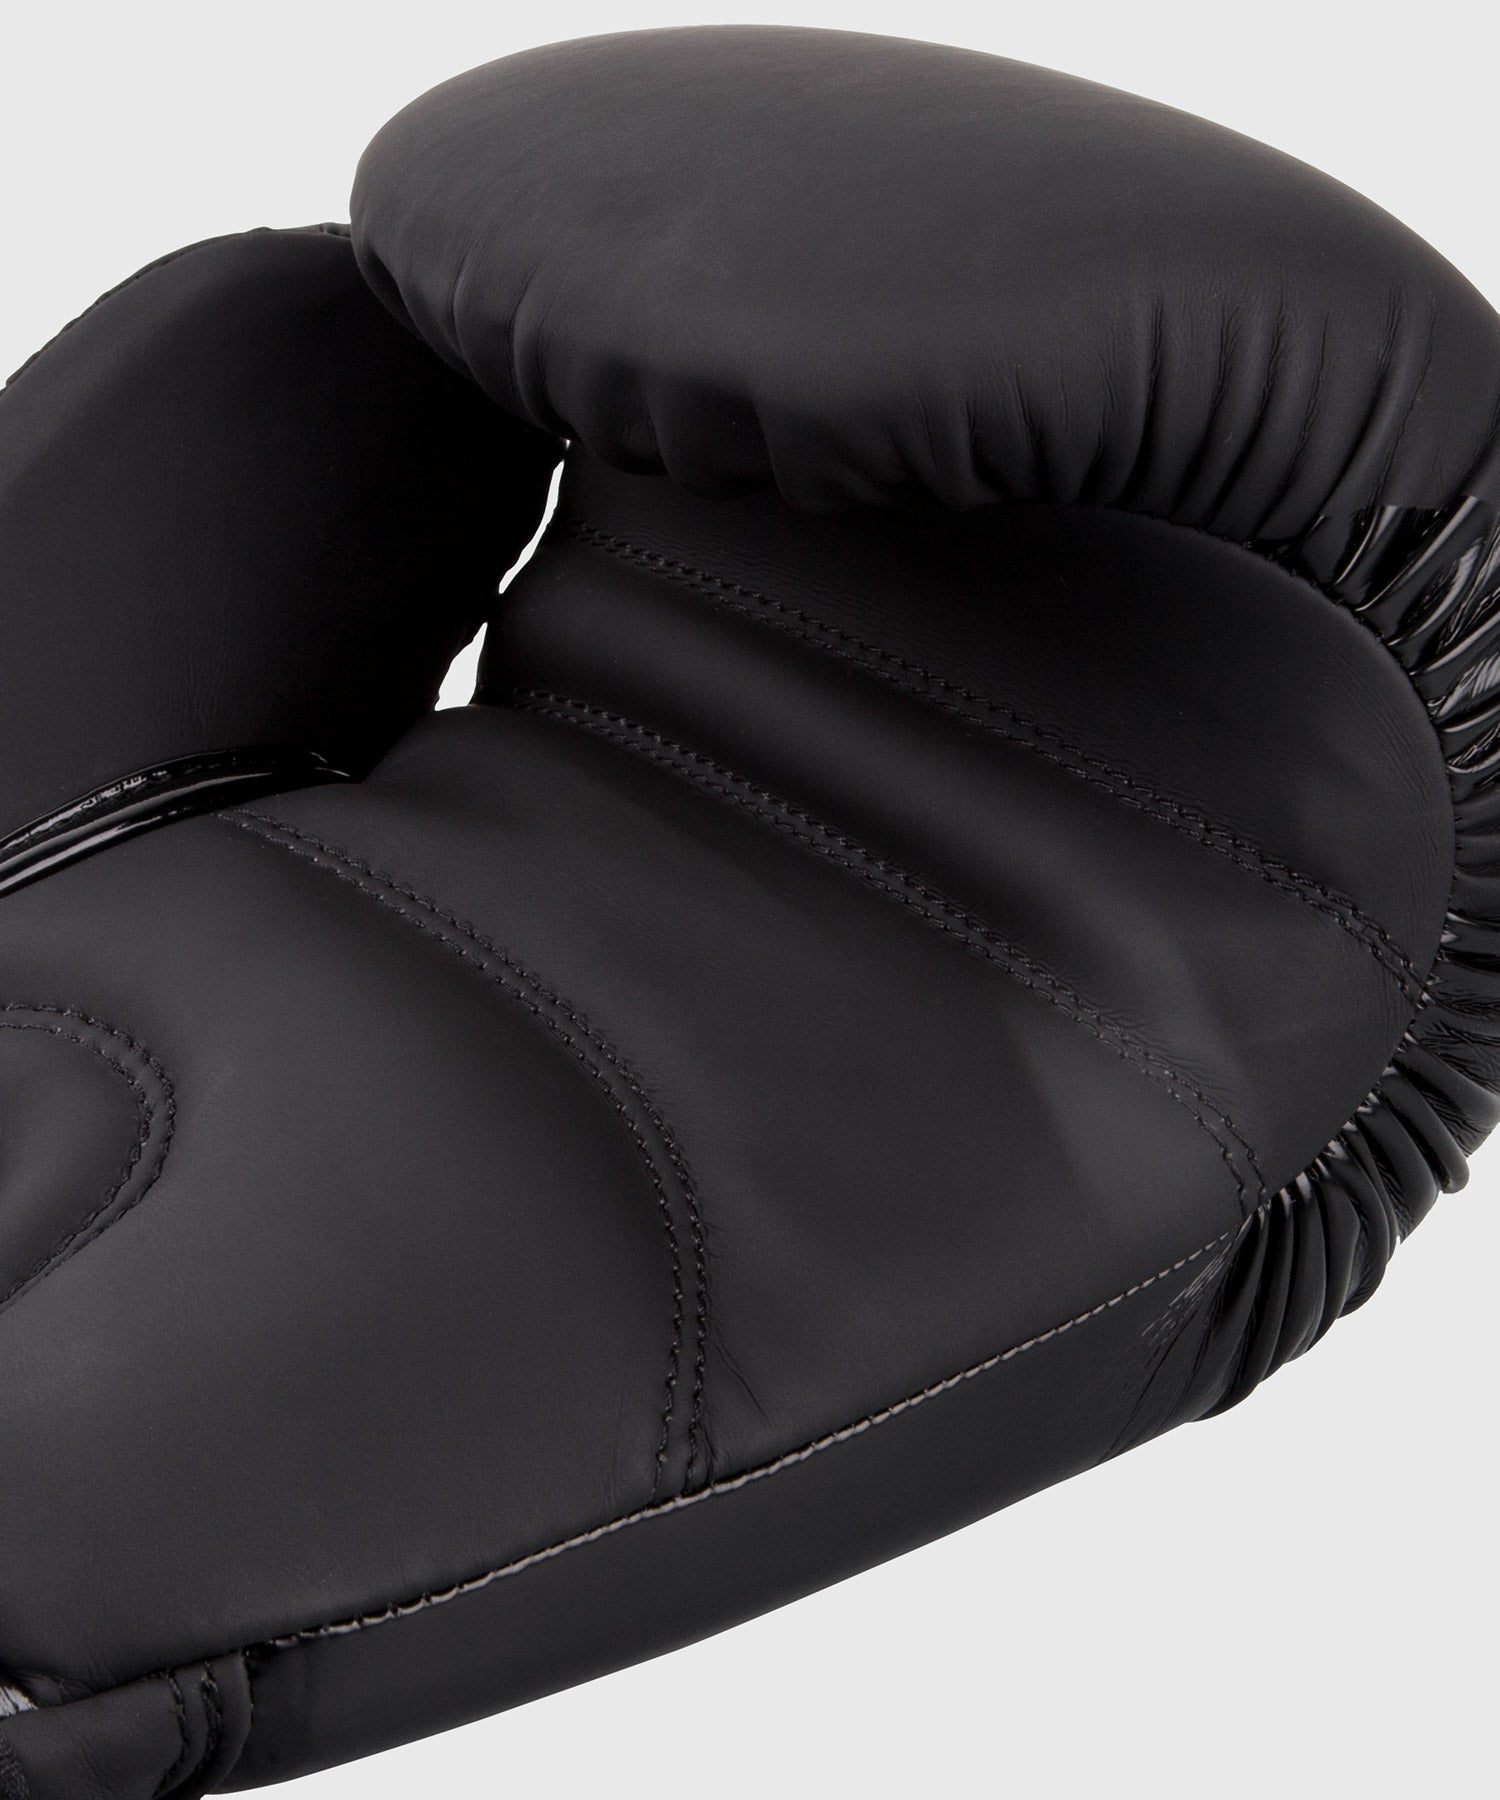 Venum Boxing Gloves Contender 2.0 - Black/Grey-White - Venum